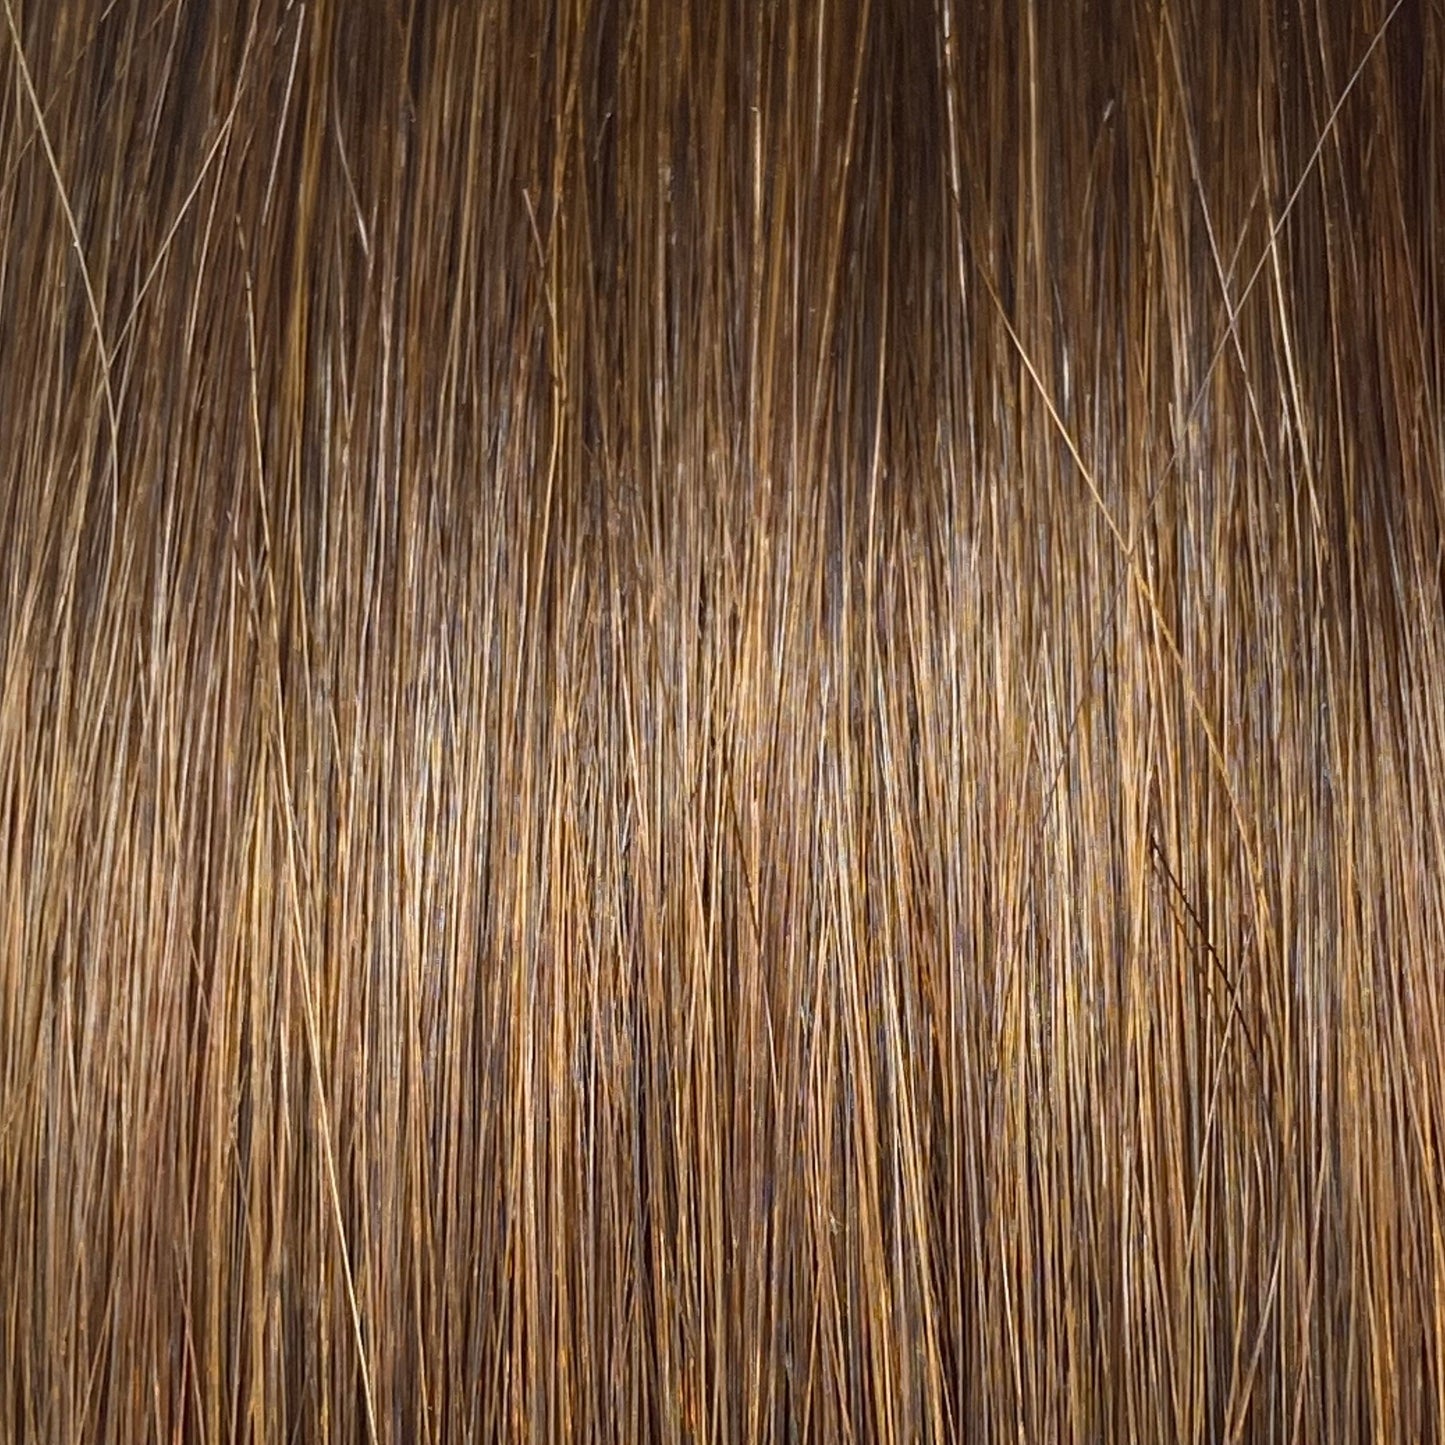 Fusion hair extensions #4 - 40cm/16 inches - Chestnut Fusion Euro So Cap 